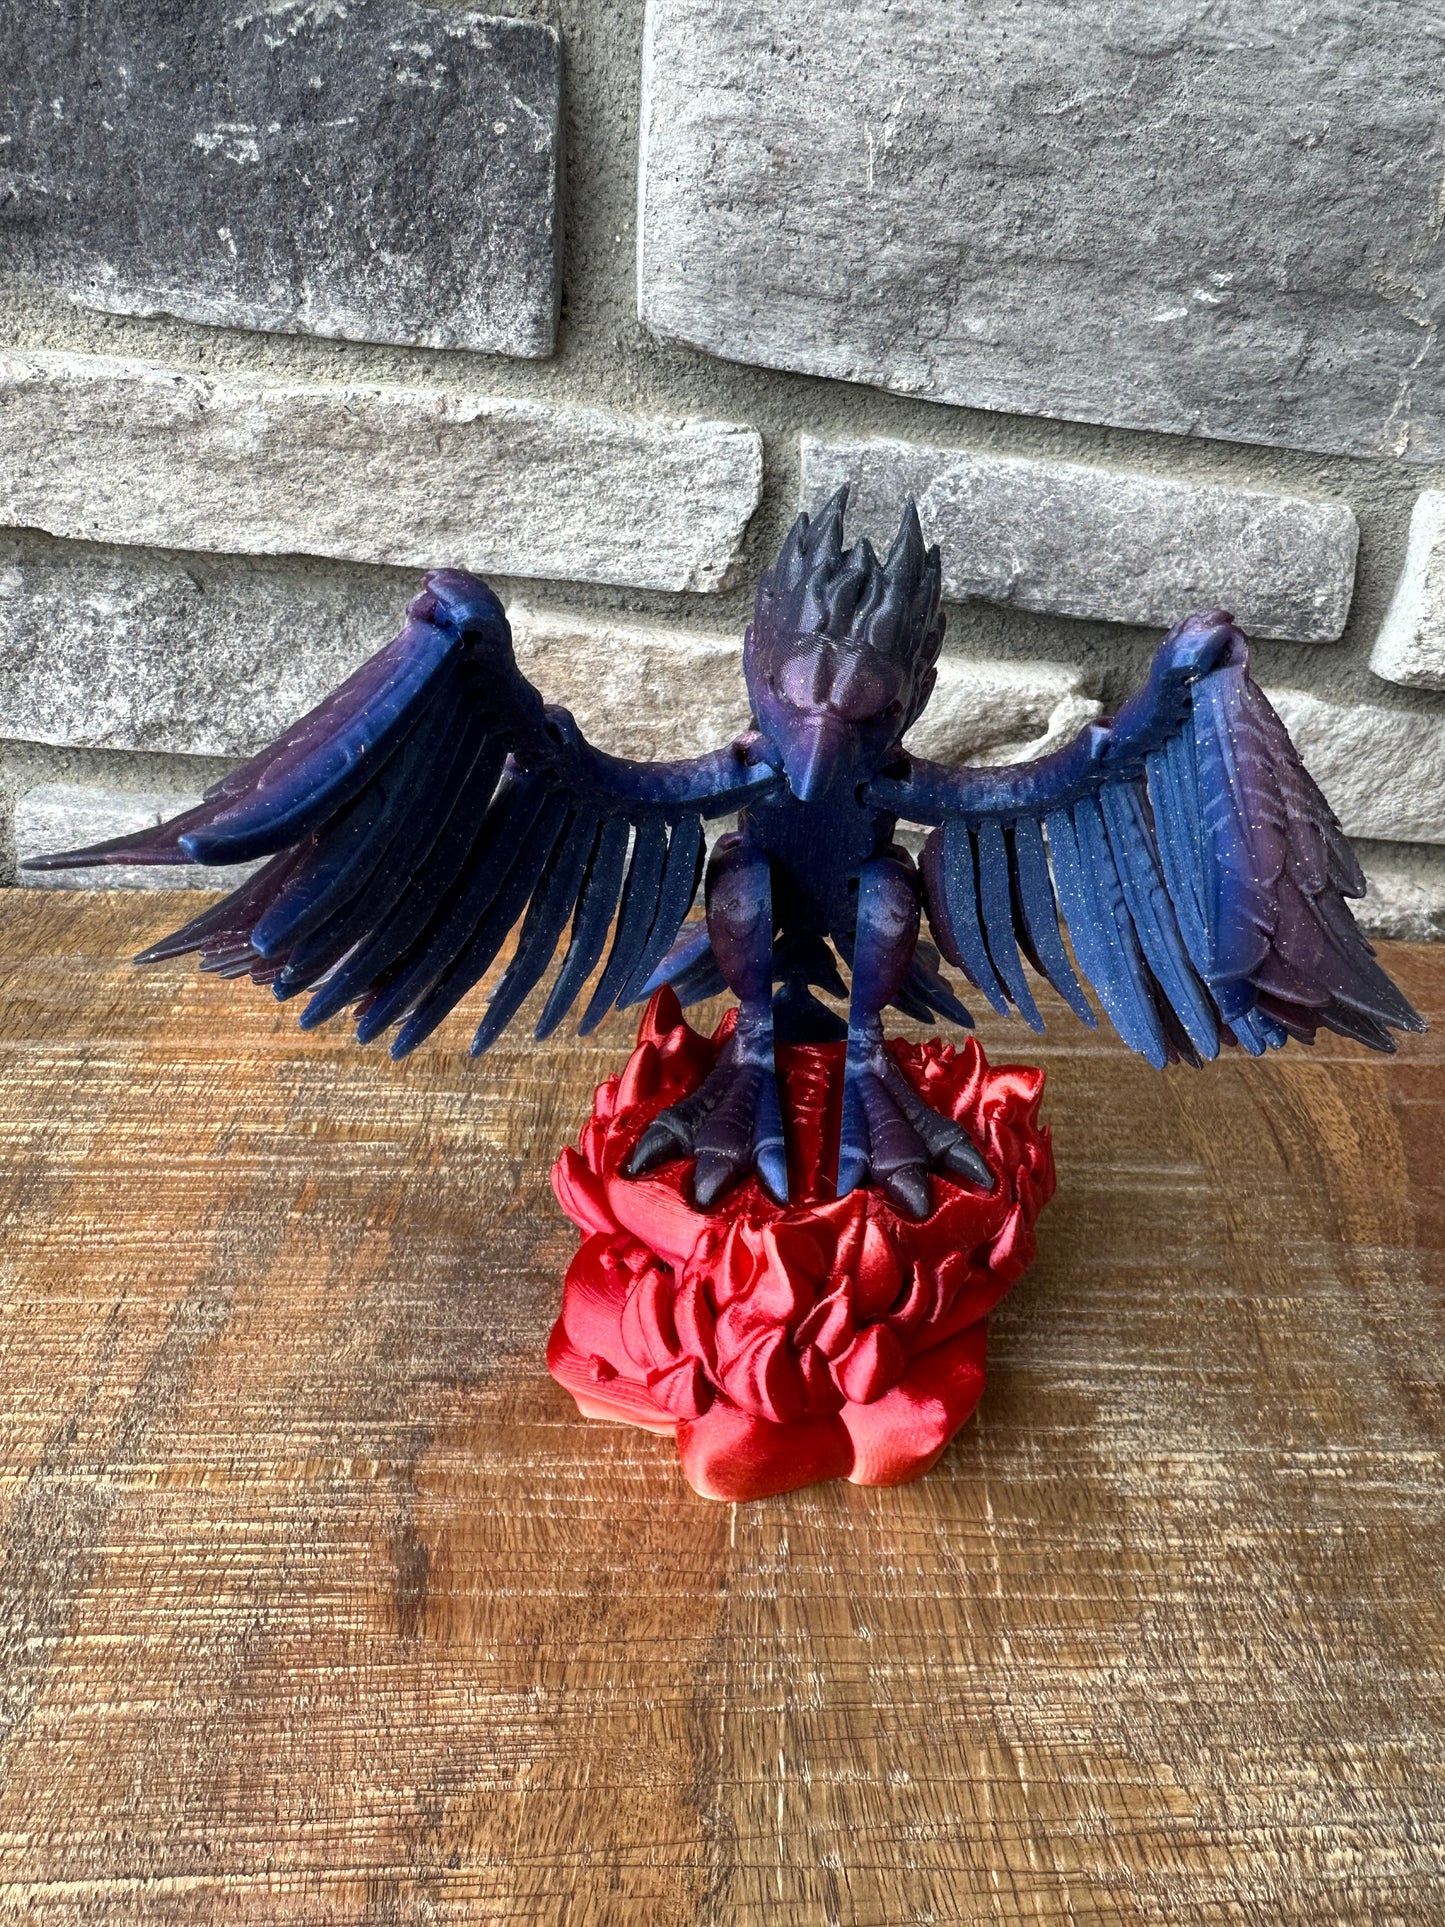 Phoenix Fire Stand | 3D Printed | Articulated Flexible | Custom Fidget Toy | Halloween Decoration